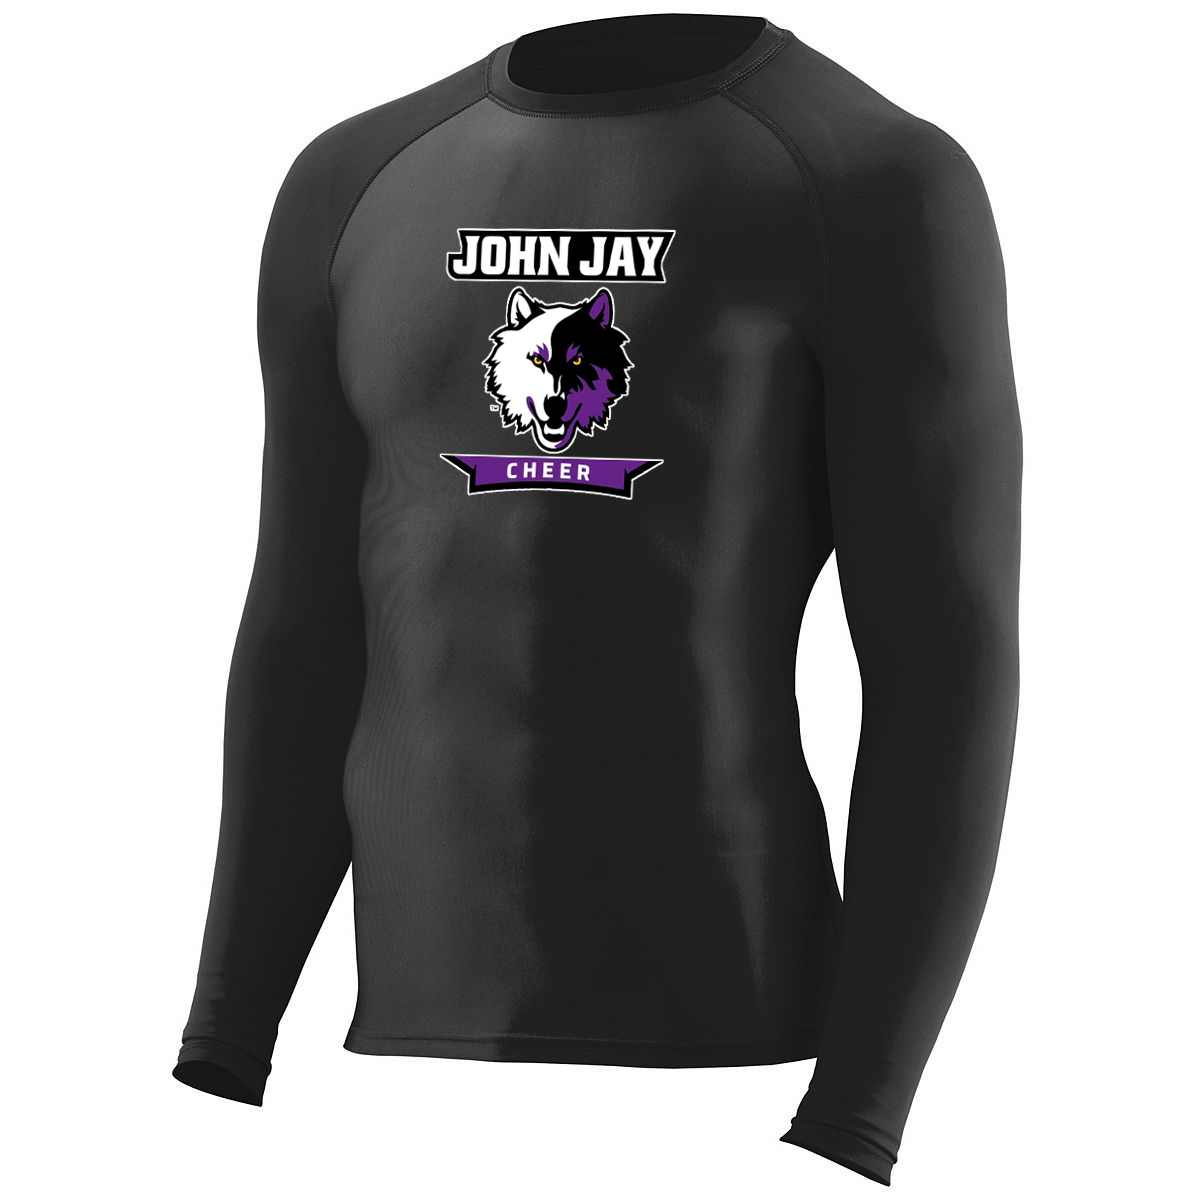 John Jay Youth Cheer Hyperform Compression Long Sleeve Shirt